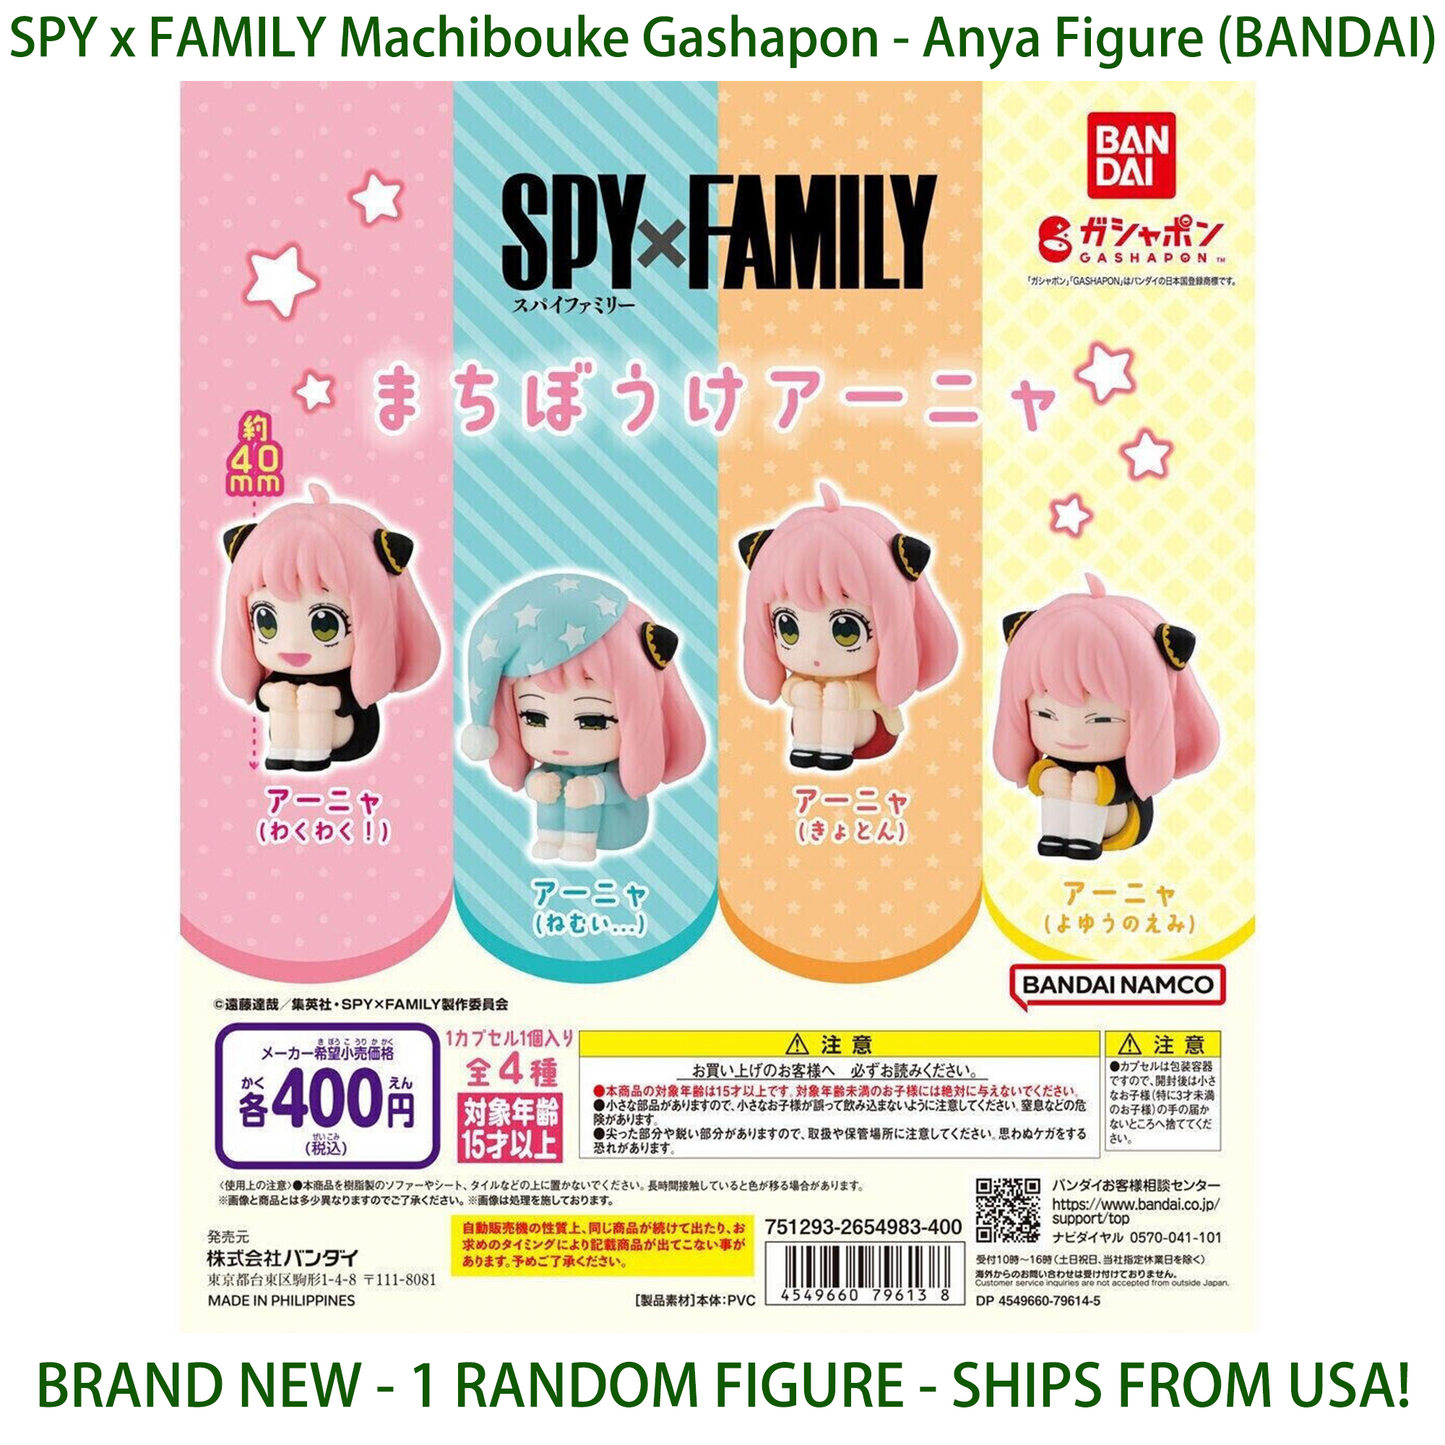 HAPPY ANYA FORGER - SPY x FAMILY Machibouke BANDAI Gashapon Figure (BRAND NEW)